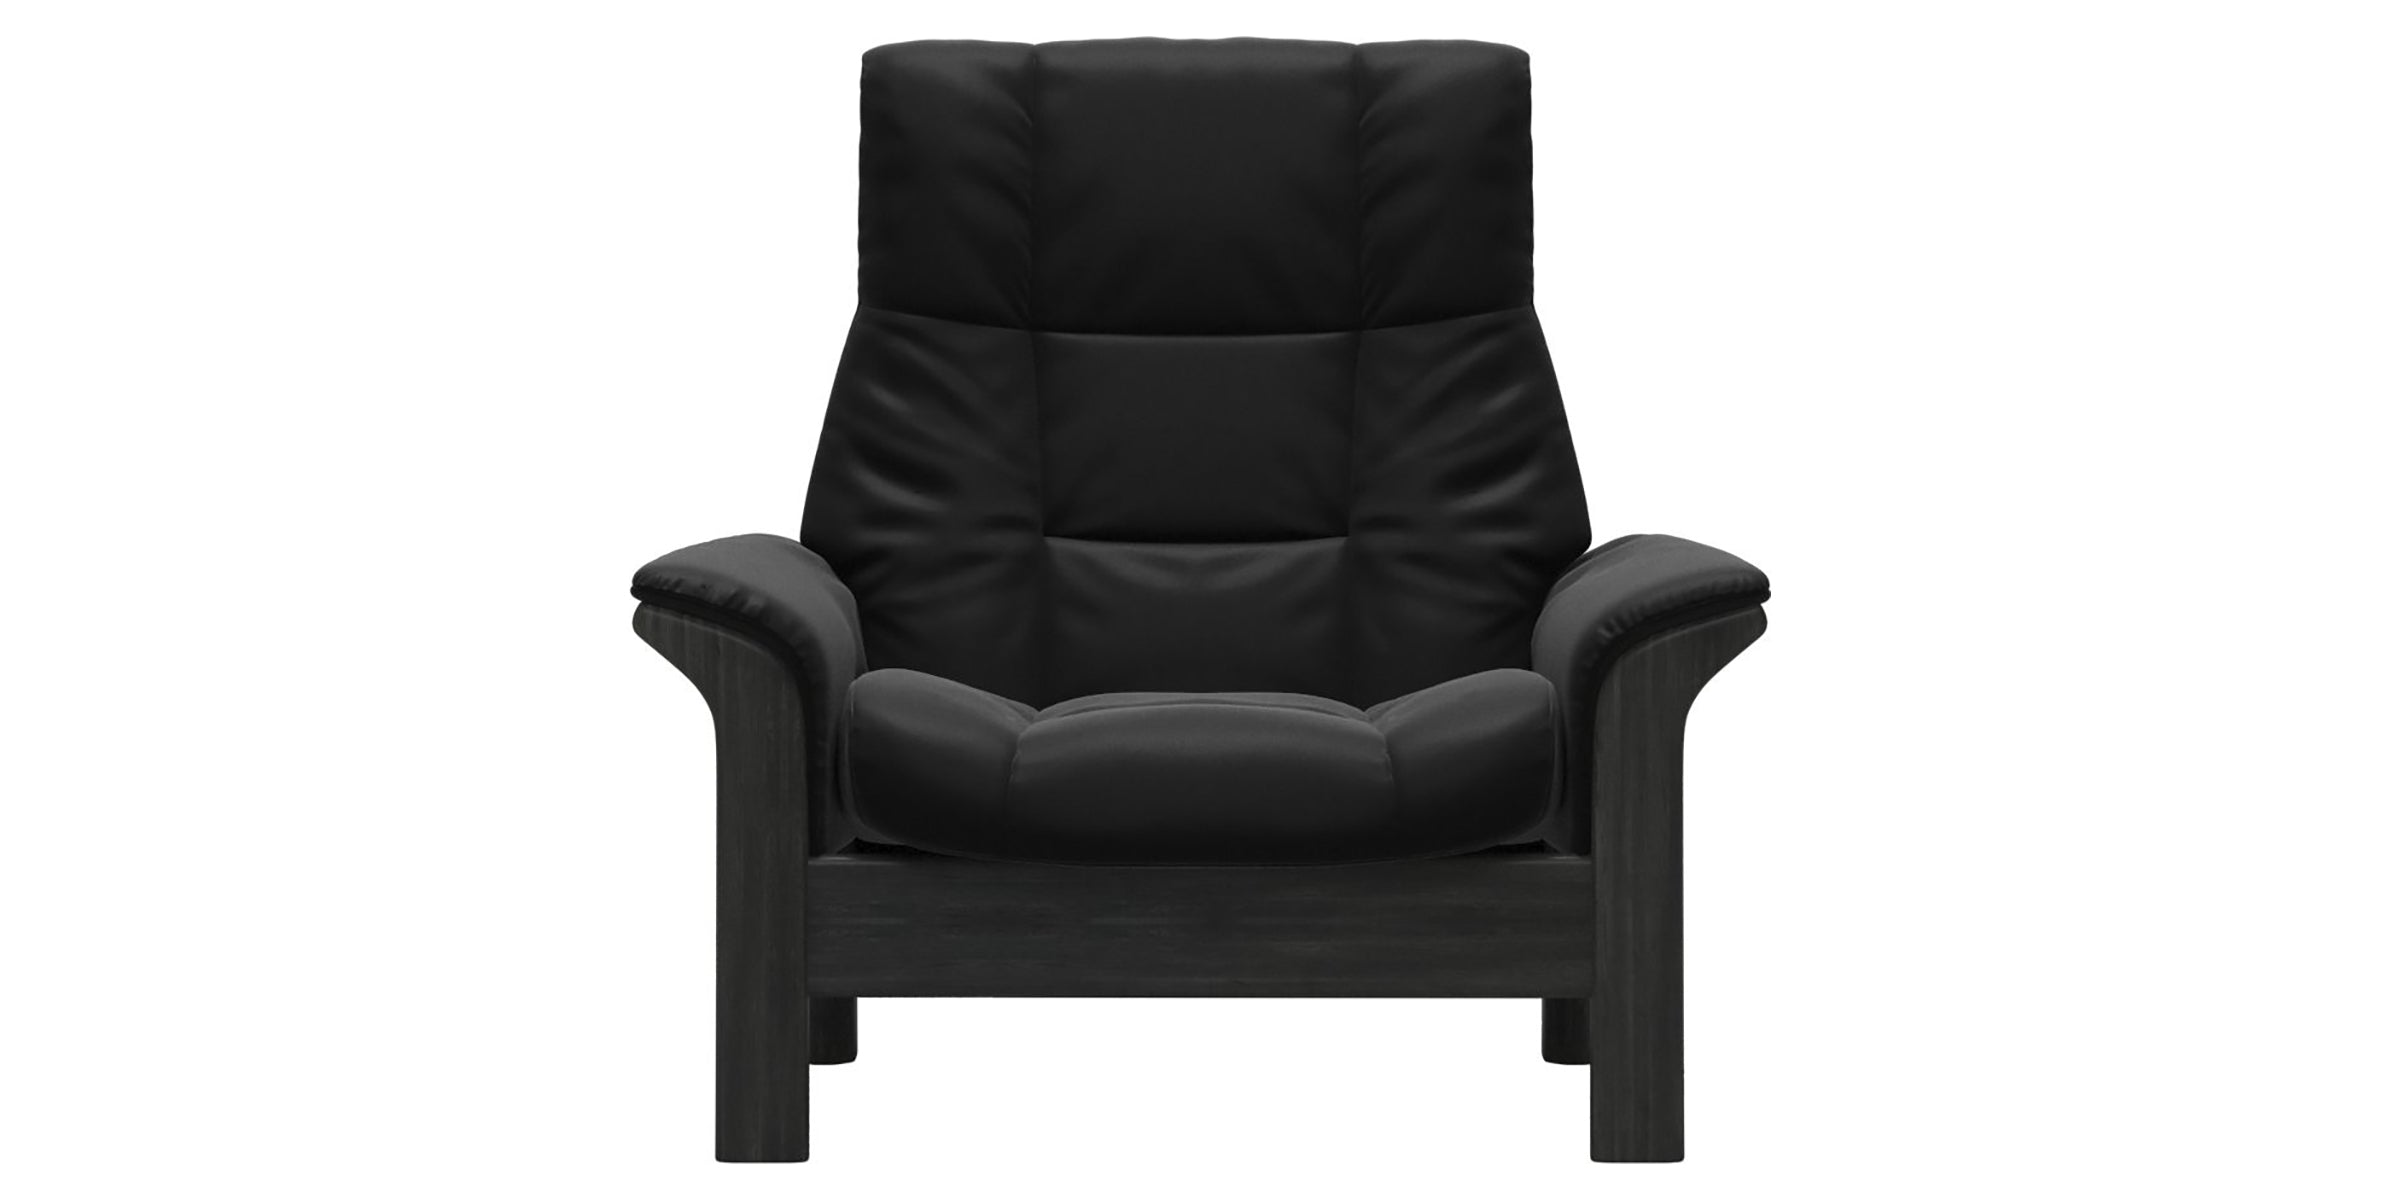 Paloma Leather Black and Grey Base | Stressless Buckingham High Back Chair | Valley Ridge Furniture